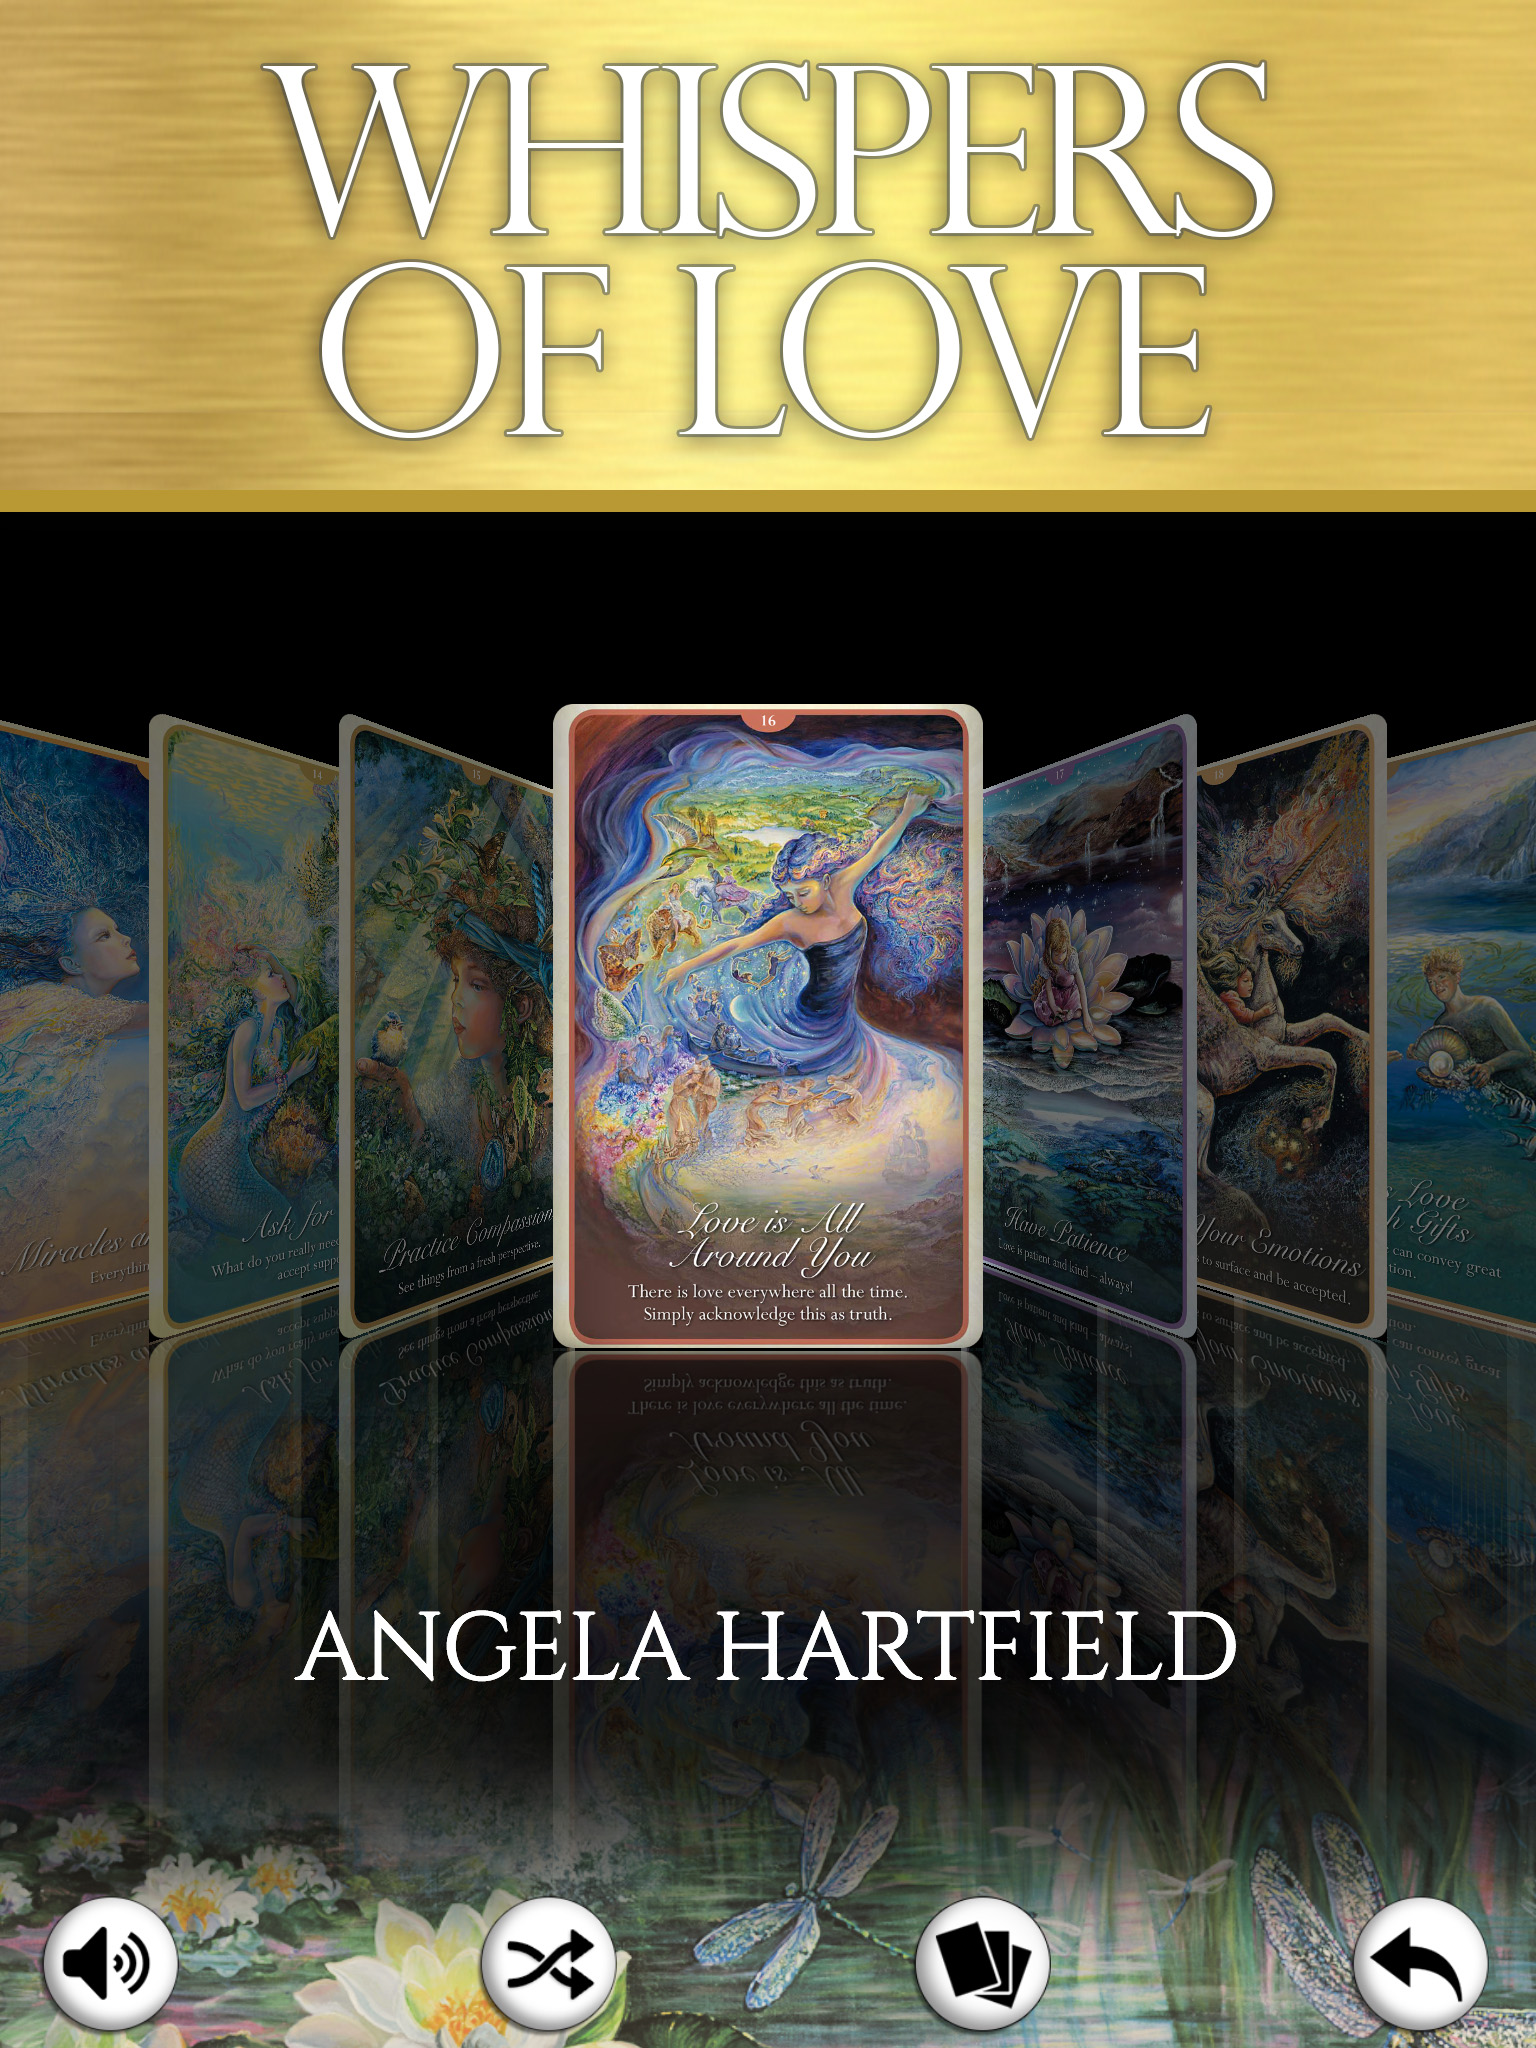 Whispers of Love Oracle app by Angela Hartfield